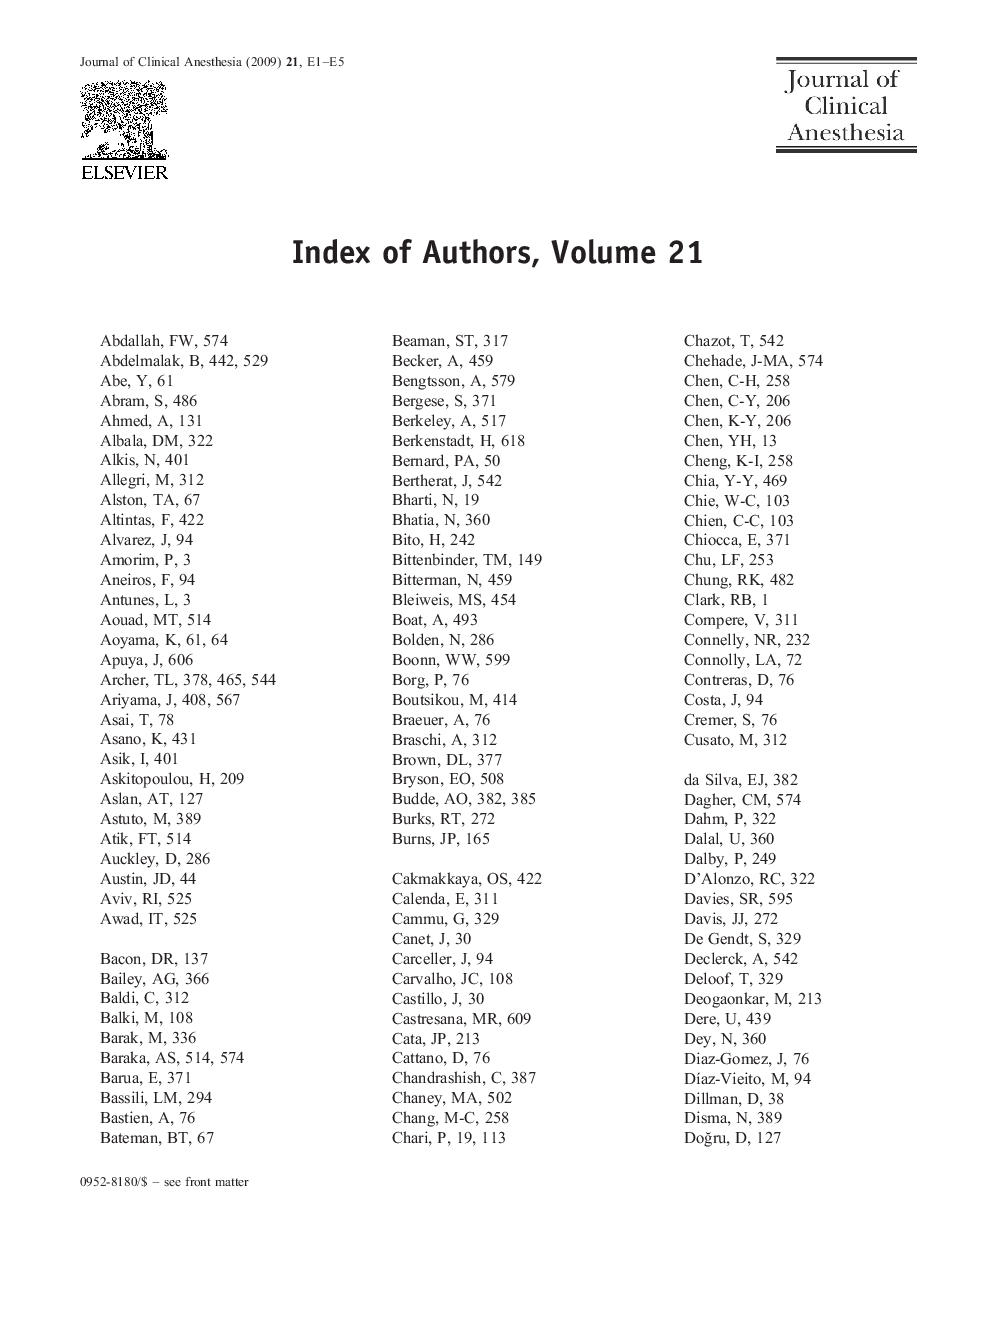 Author Index for Volume 21, 2009